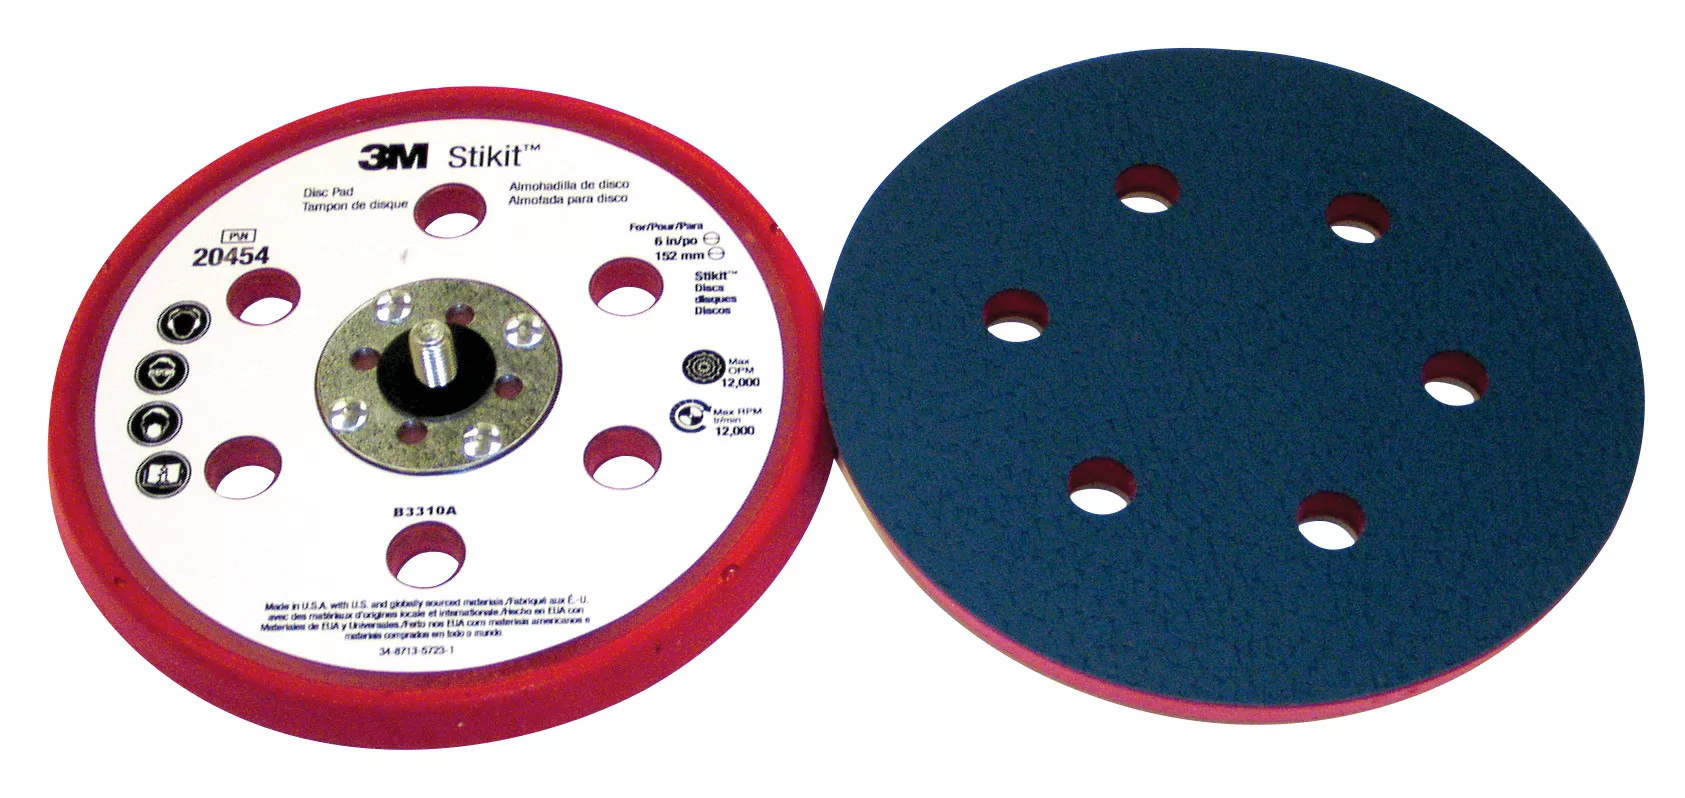 SKU 7100119723 | 3M™ Stikit™ Low Profile Disc Pad